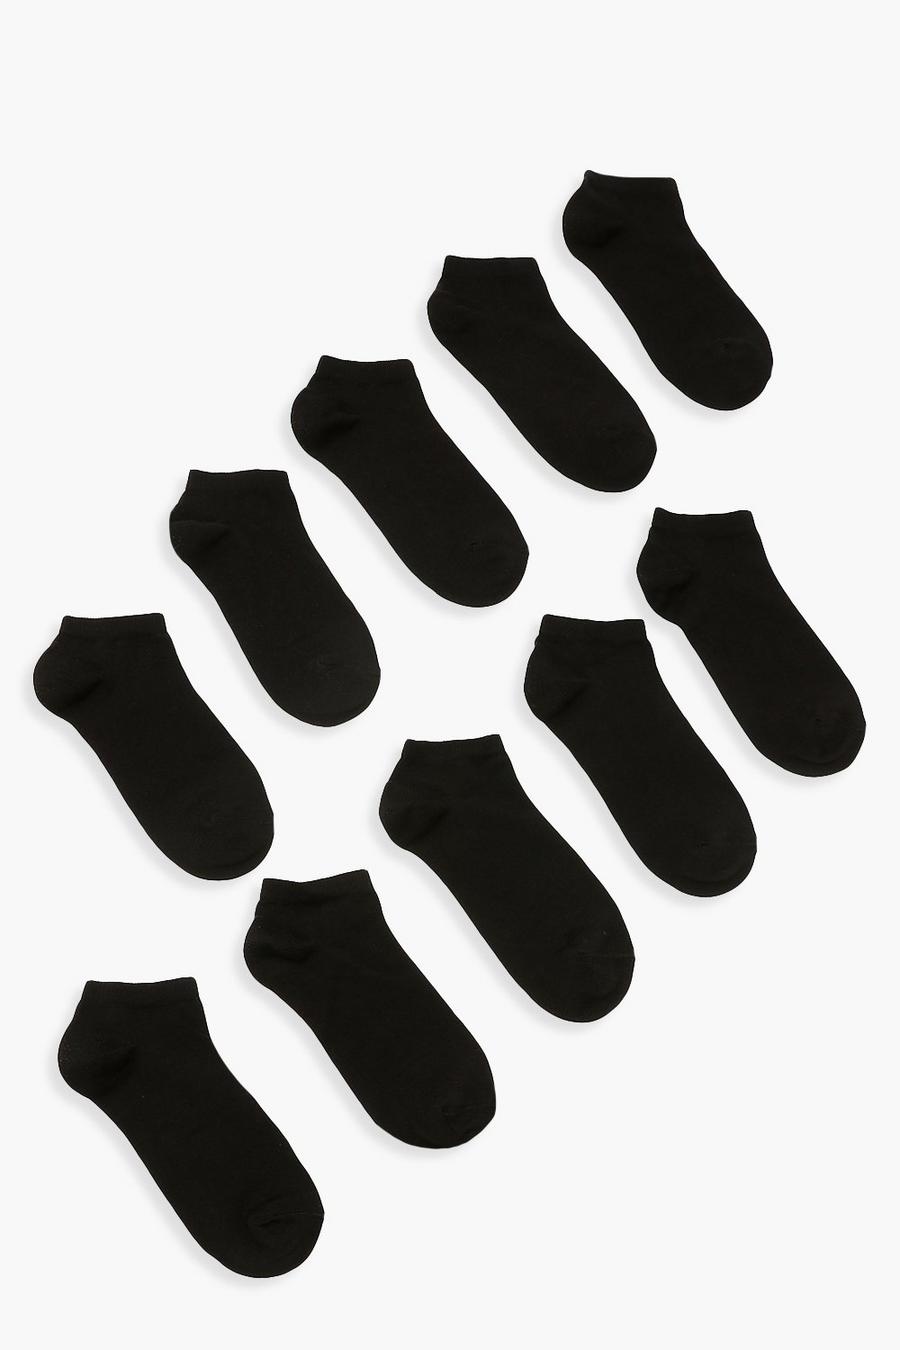 Calzini sportivi Basic (Set di 10), Black nero